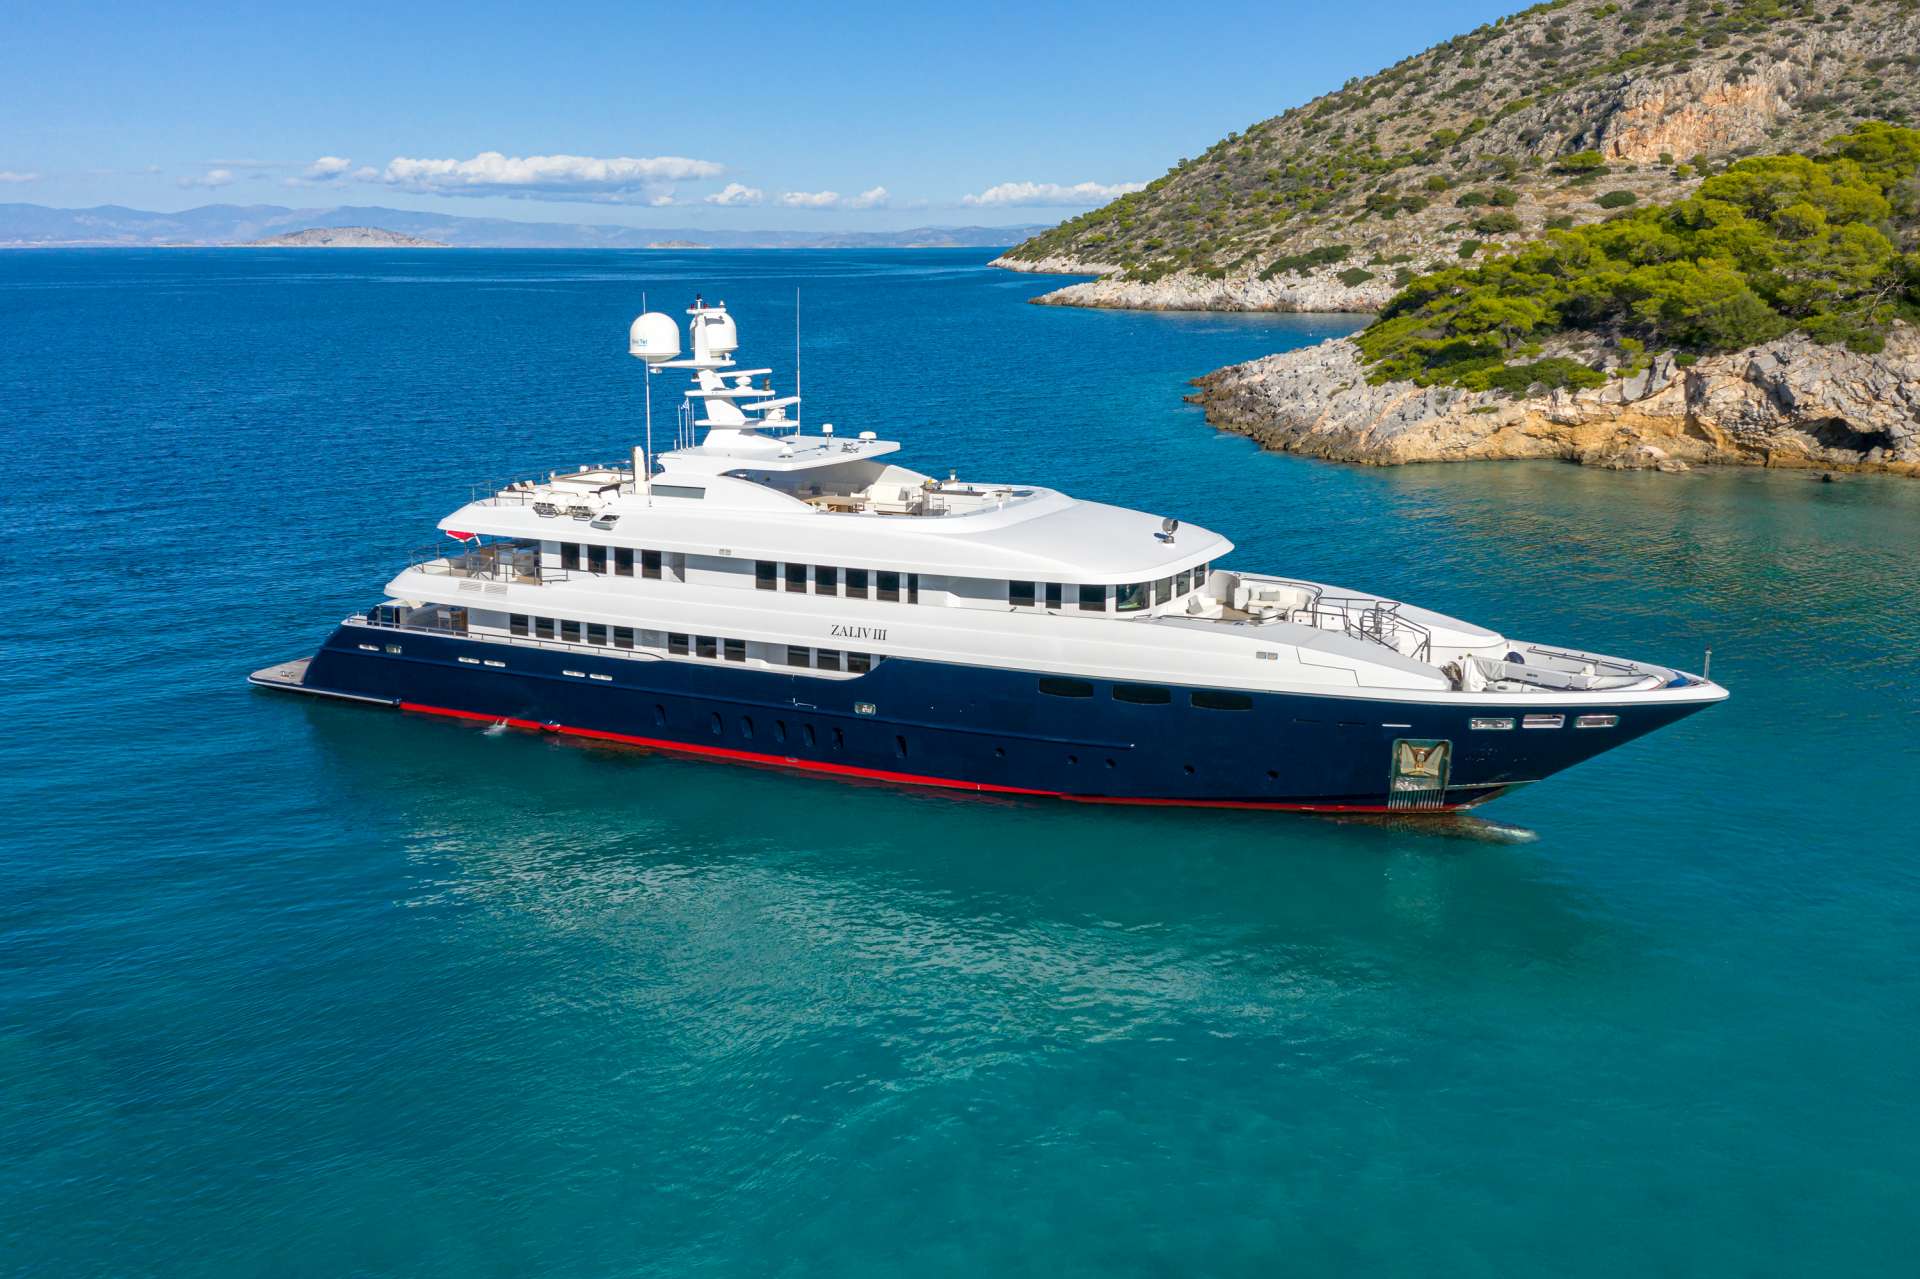 zaliv iii - Yacht Charter Vieste & Boat hire in East Mediterranean 1